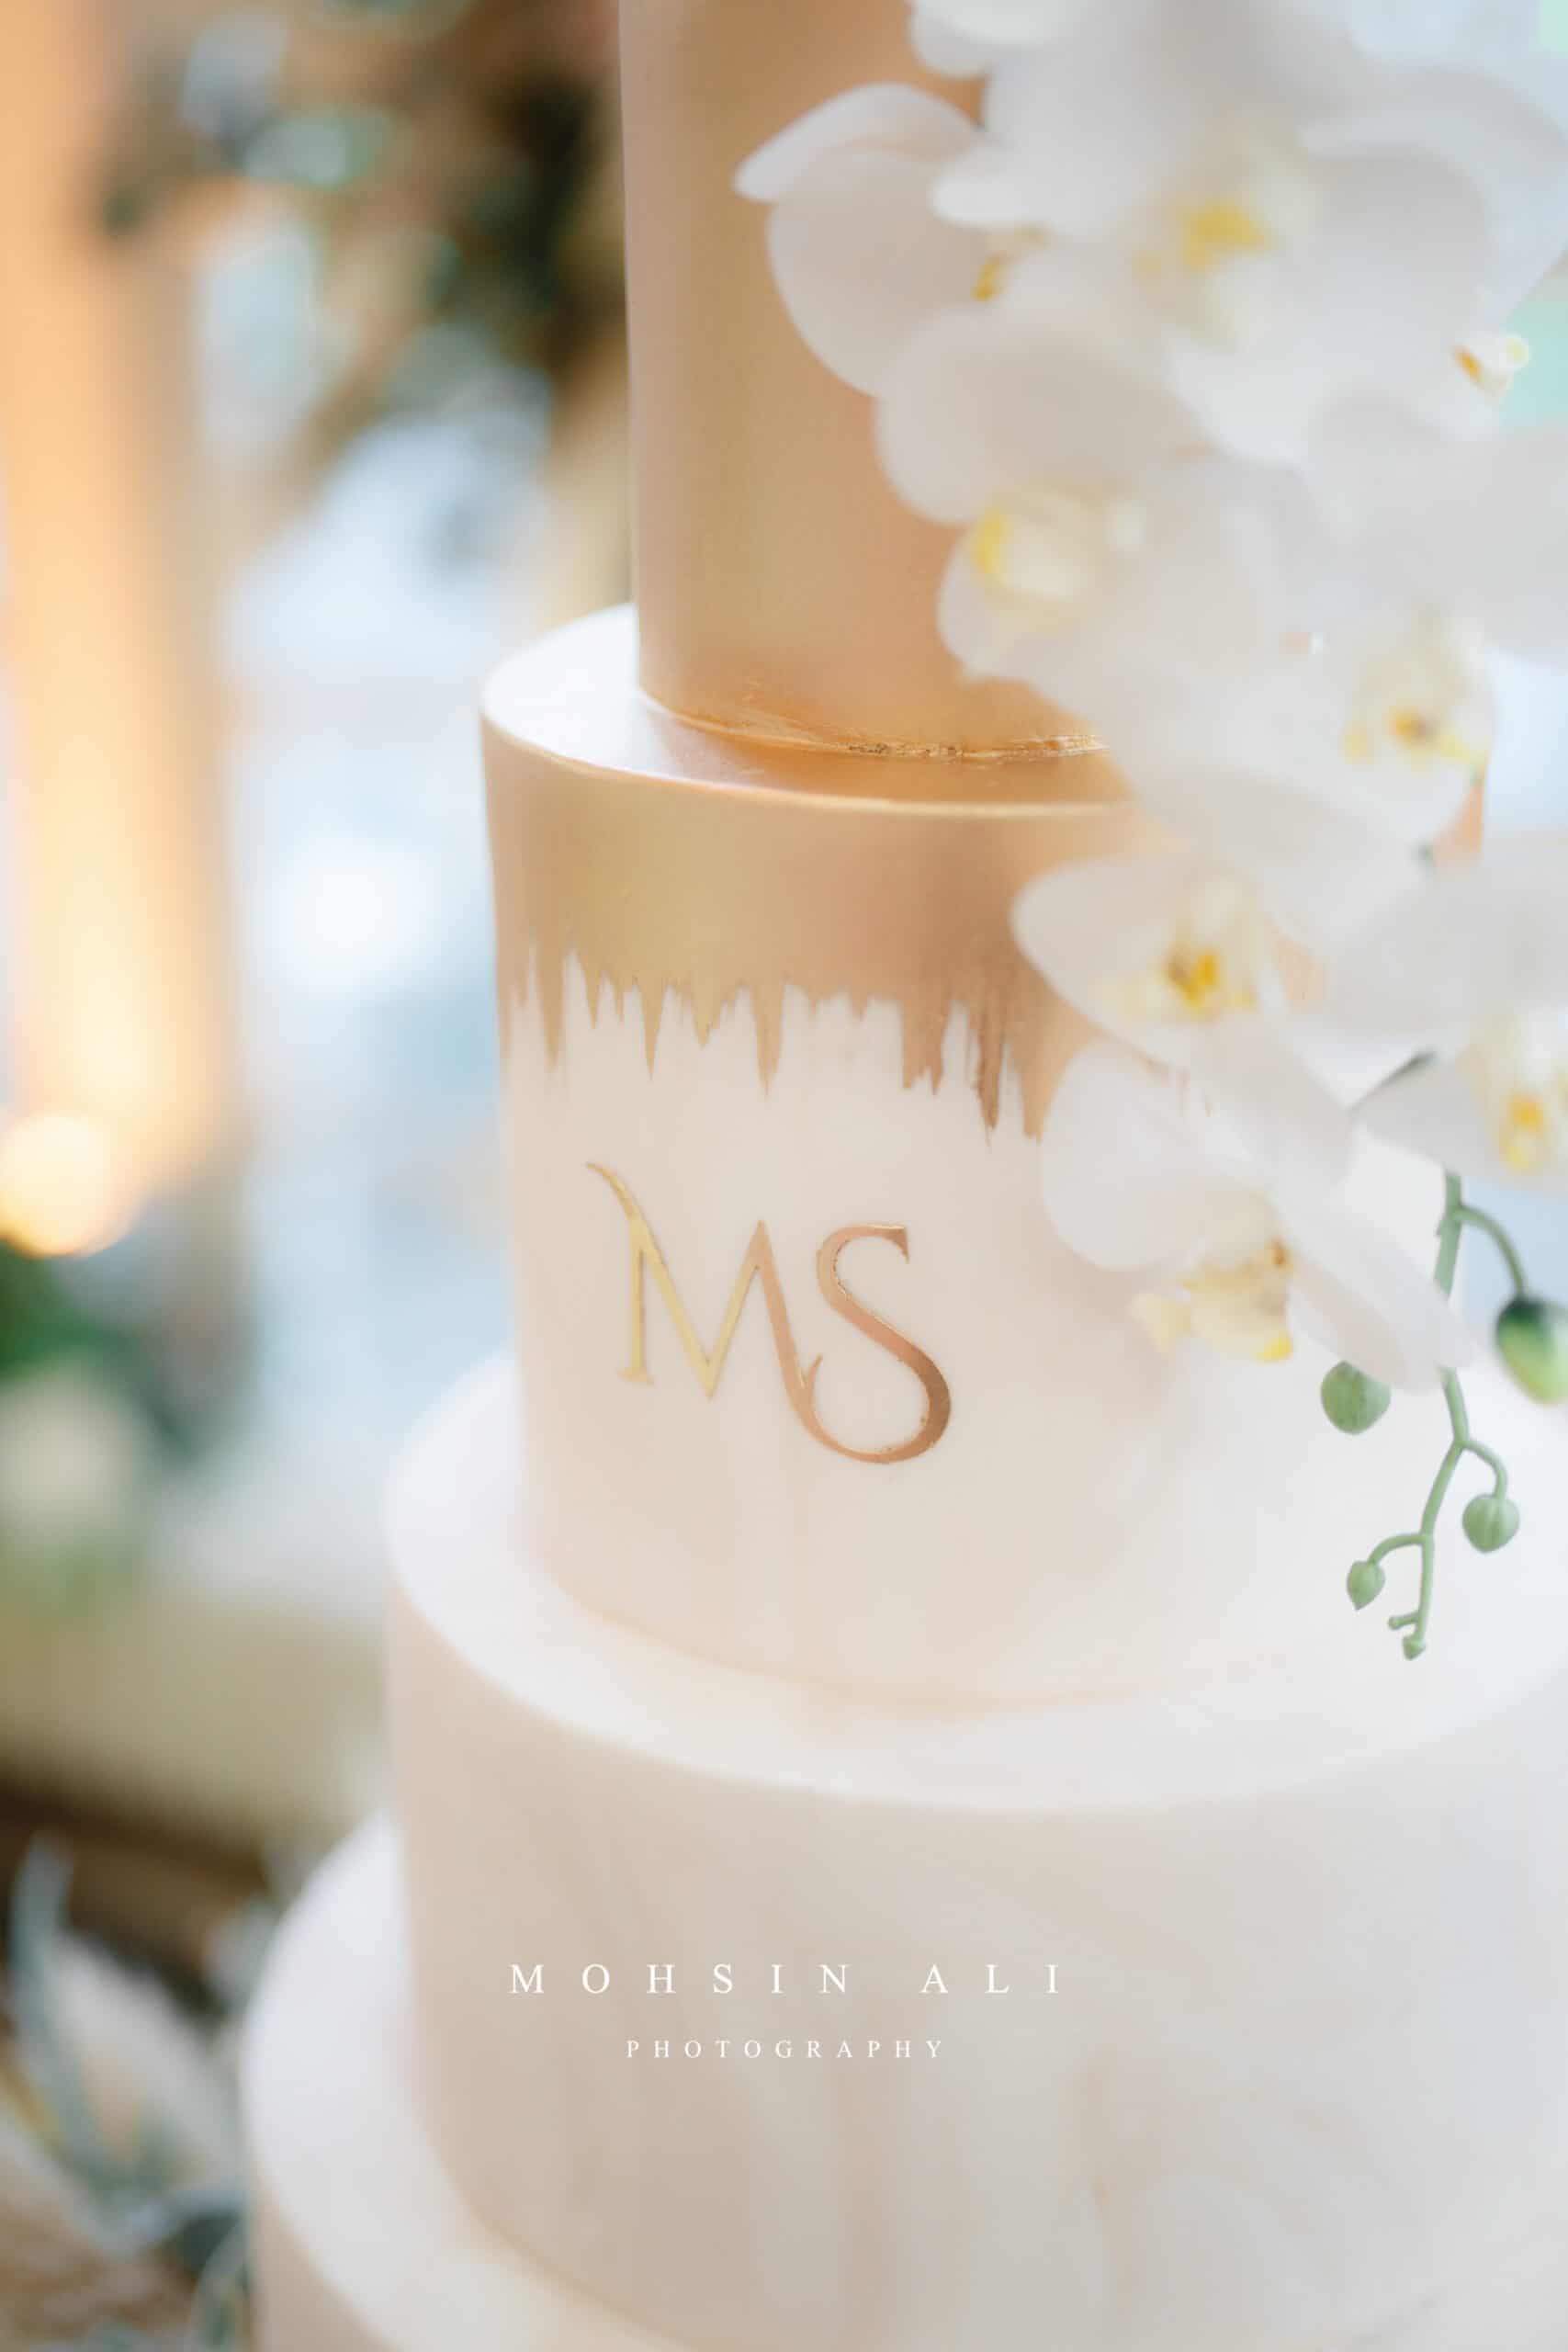 eggless wedding cakes london